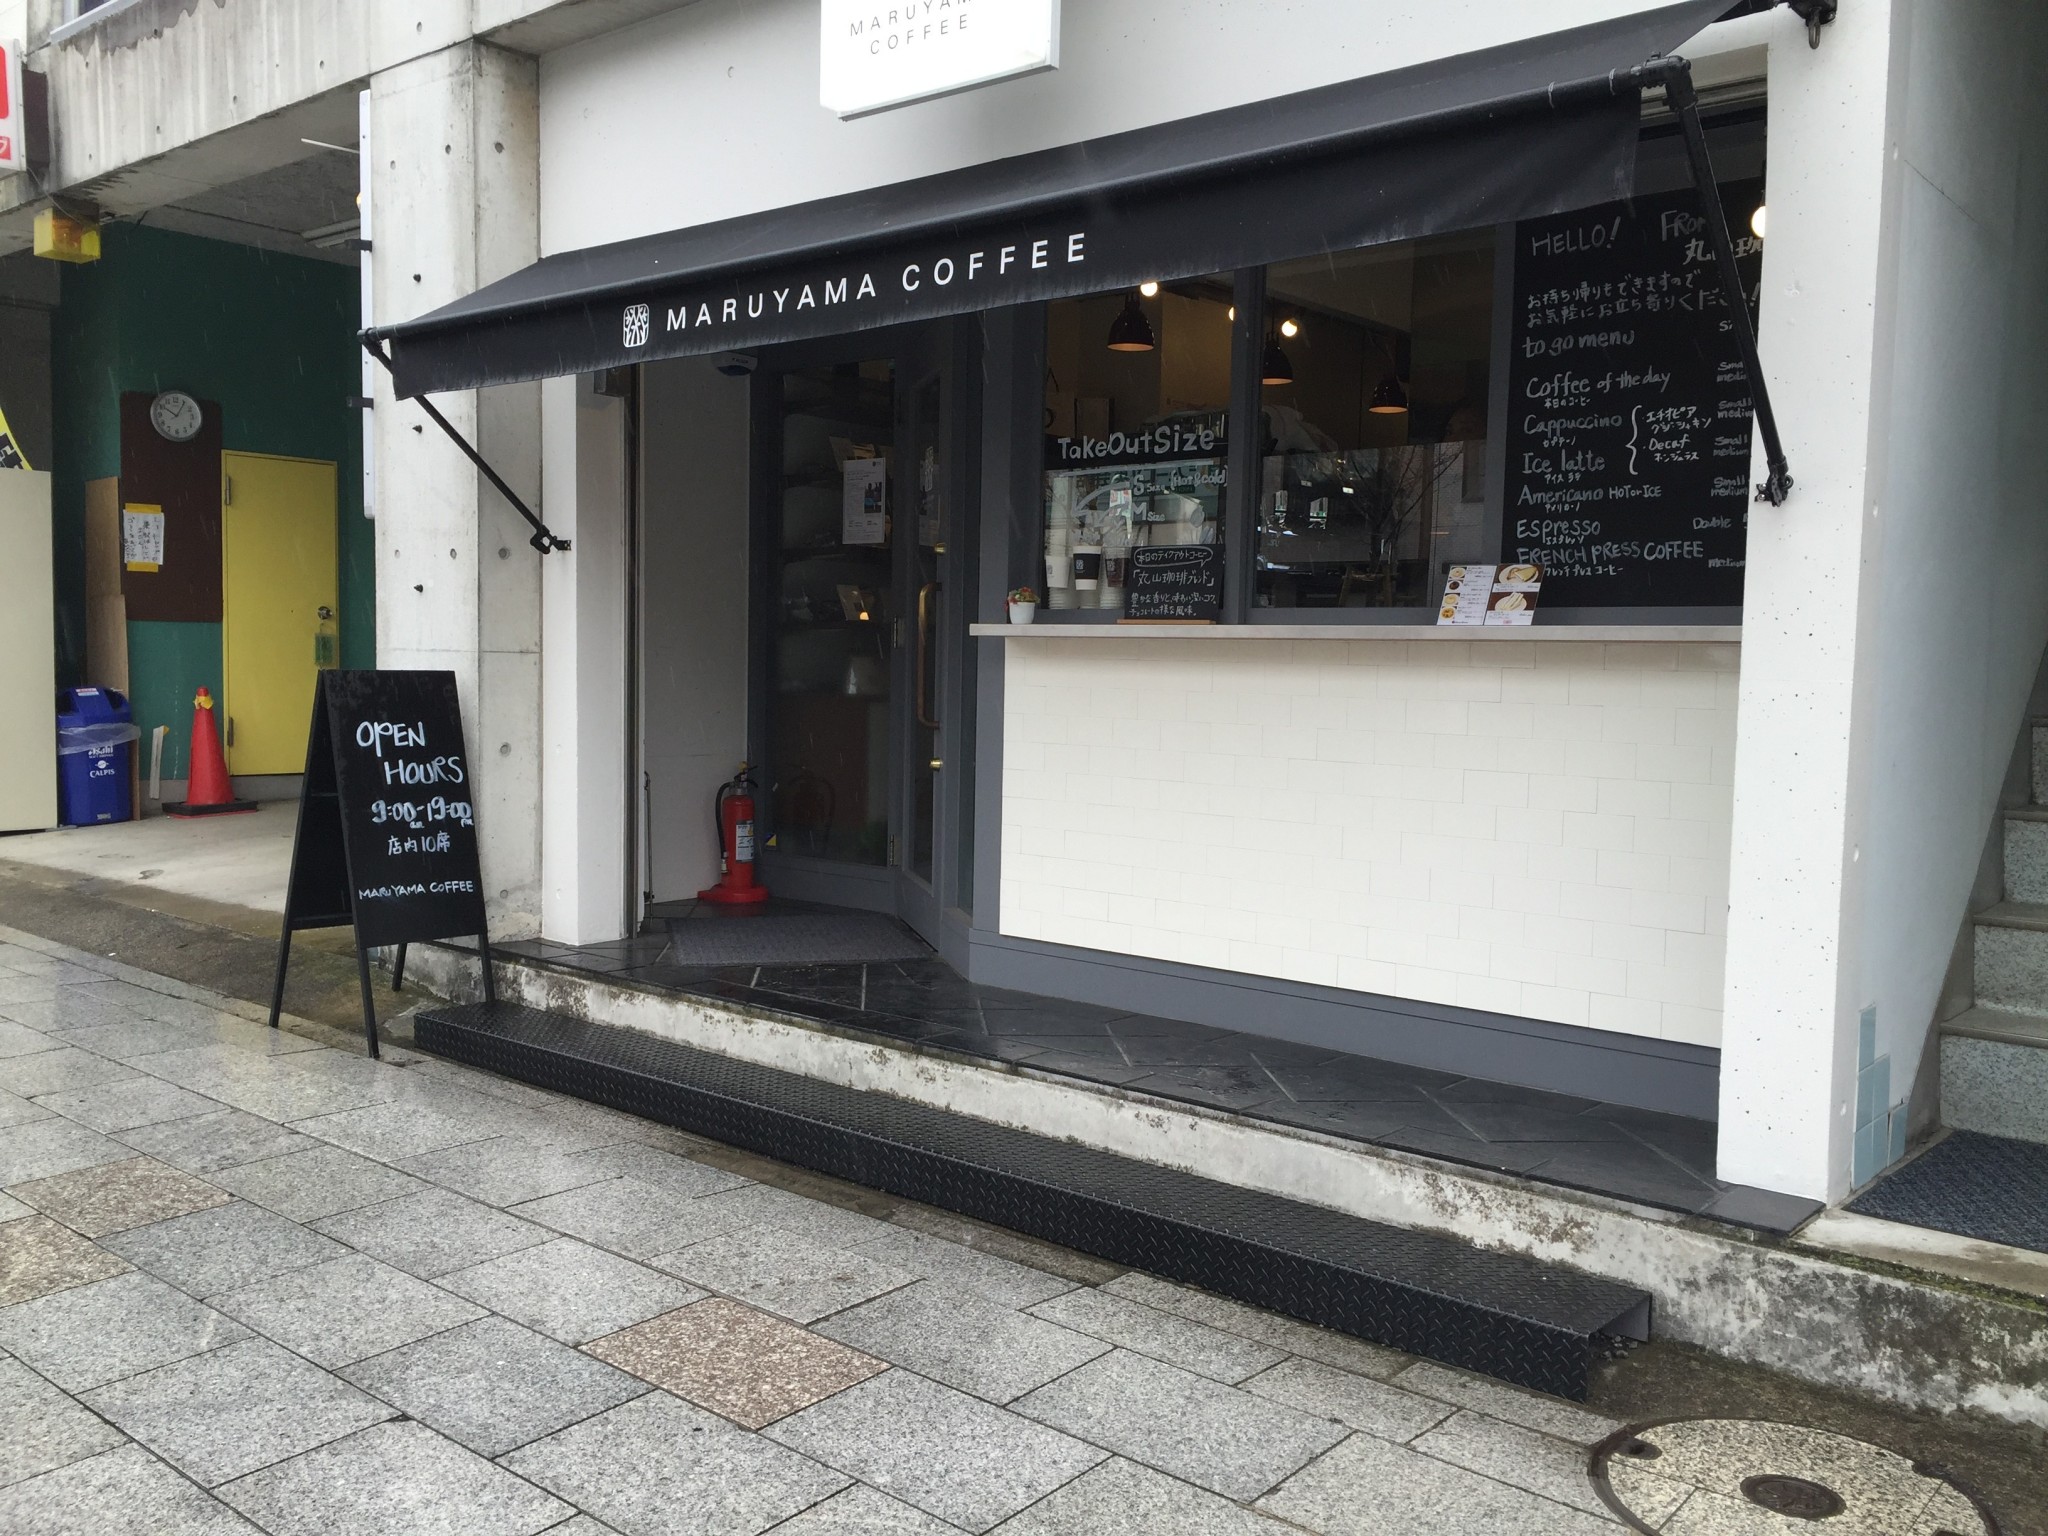 Maruyama Cafe, a coffee-lovers’ heaven!